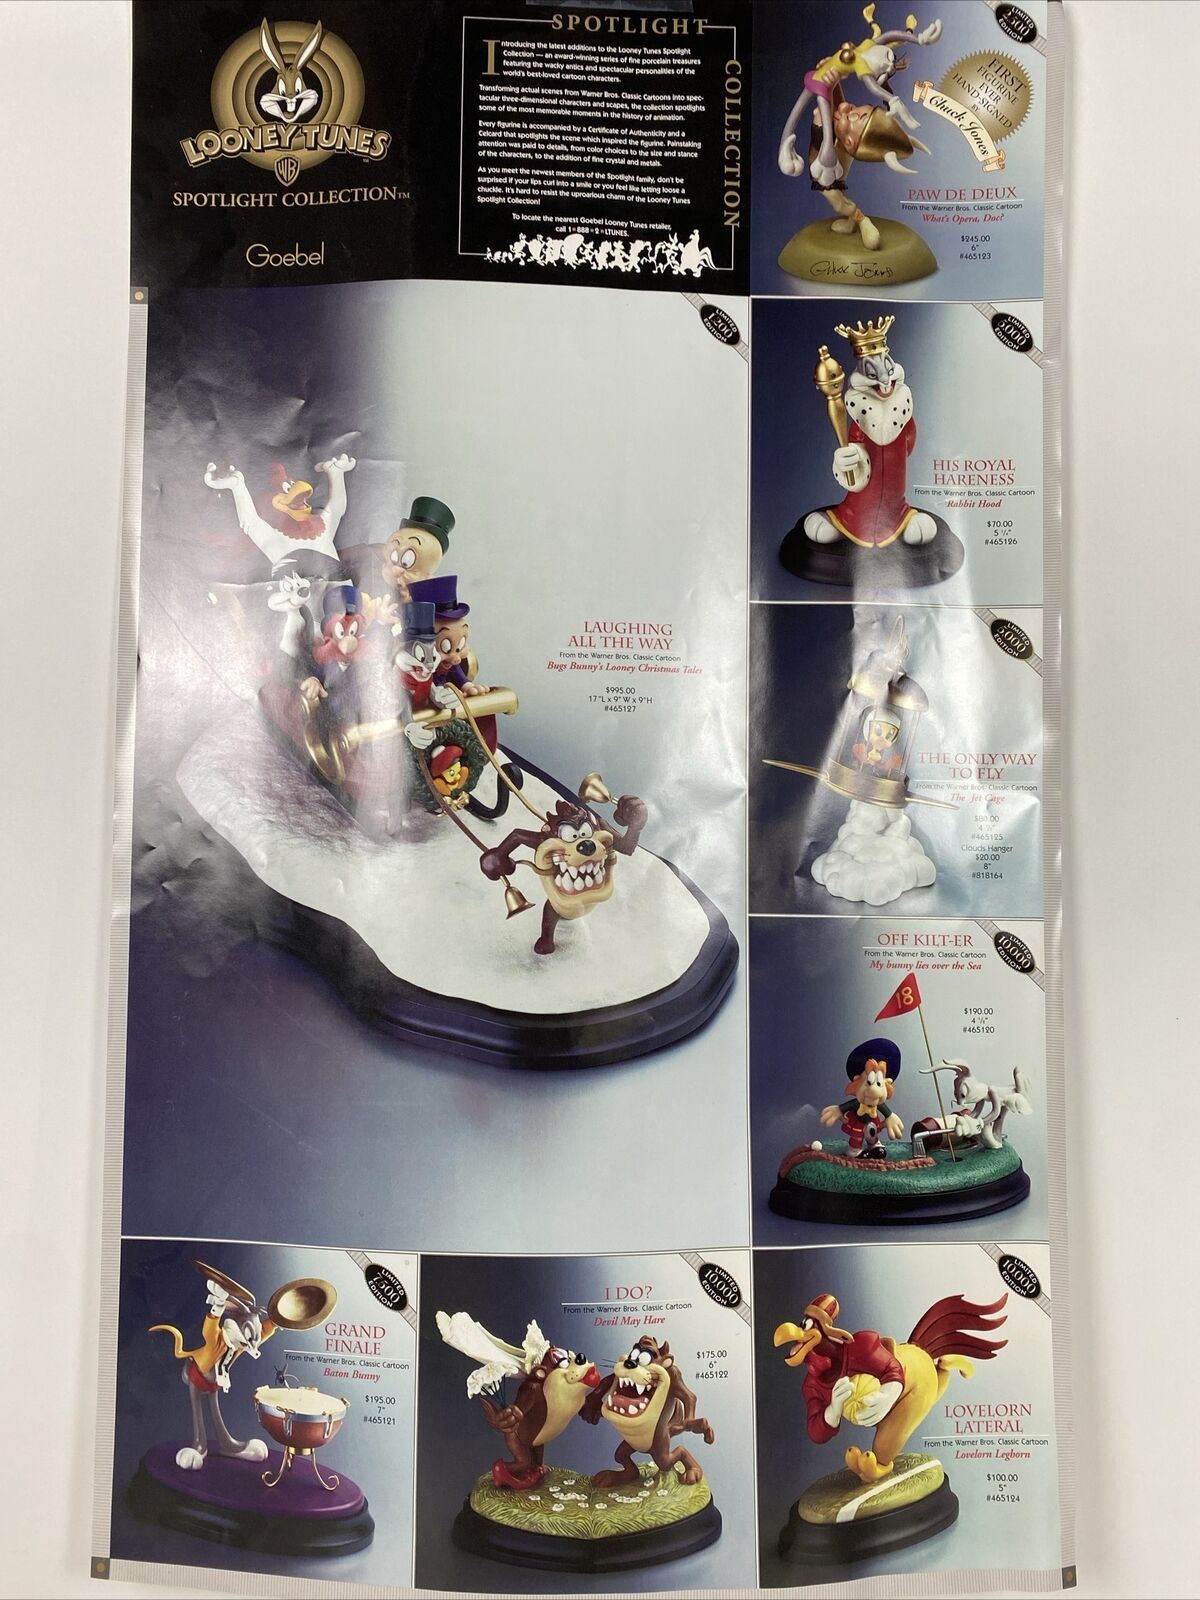 Goebel Looney Tunes Spotlight Collection Store Display Poster  34in x 21.5in